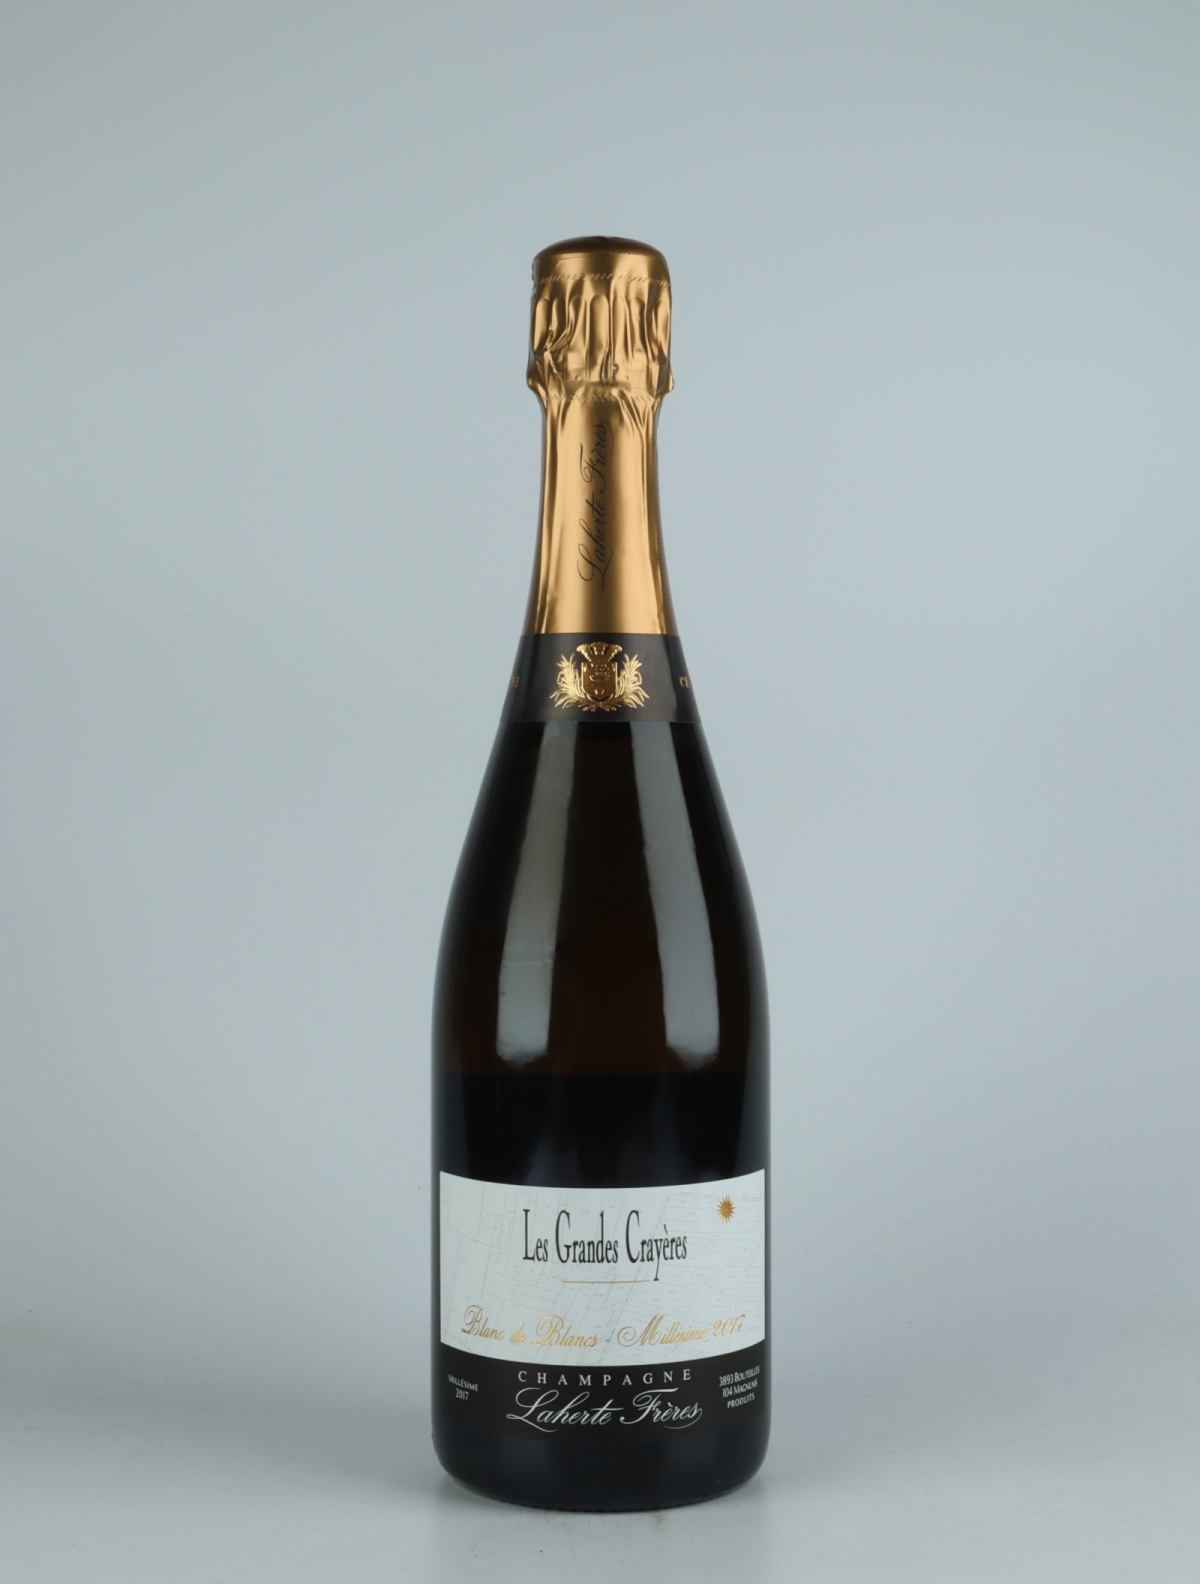 A bottle 2017 Les Grandes Crayeres Sparkling from Laherte Frères, Champagne in France